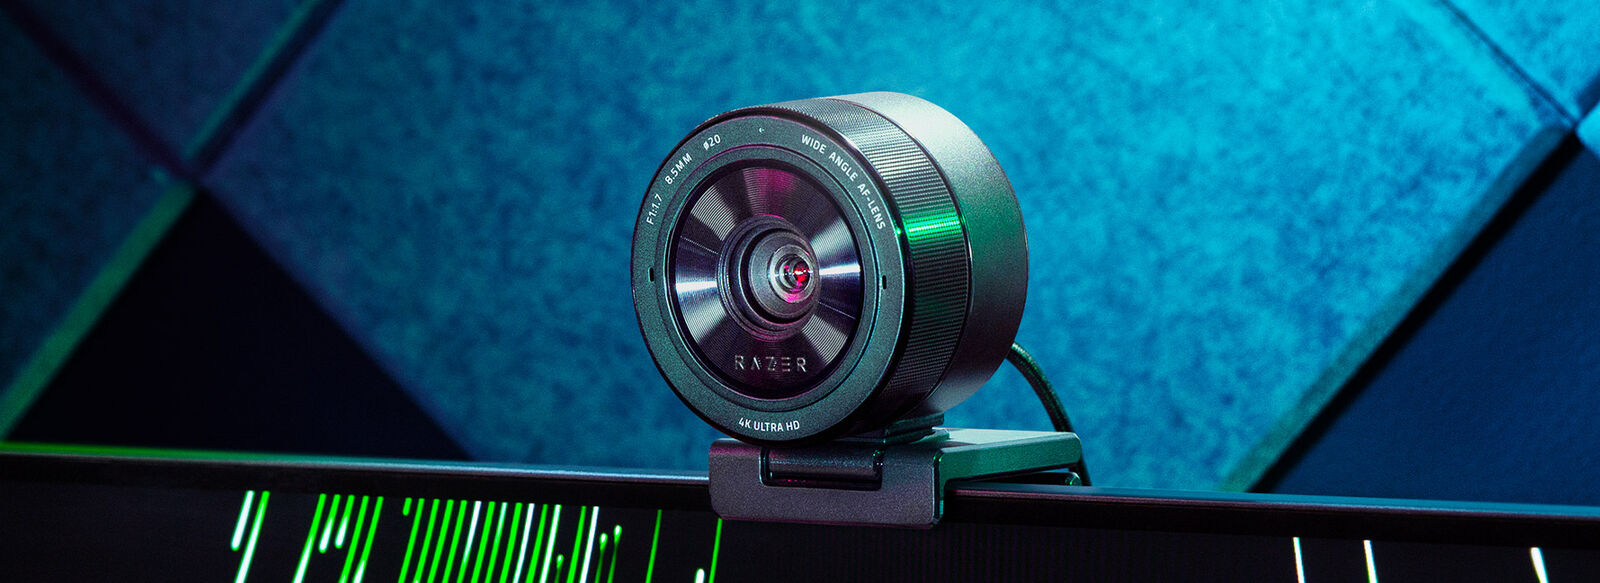 Razer Kiyo Pro Ultra 4K Webcam for Content Creation Certified Refurbished